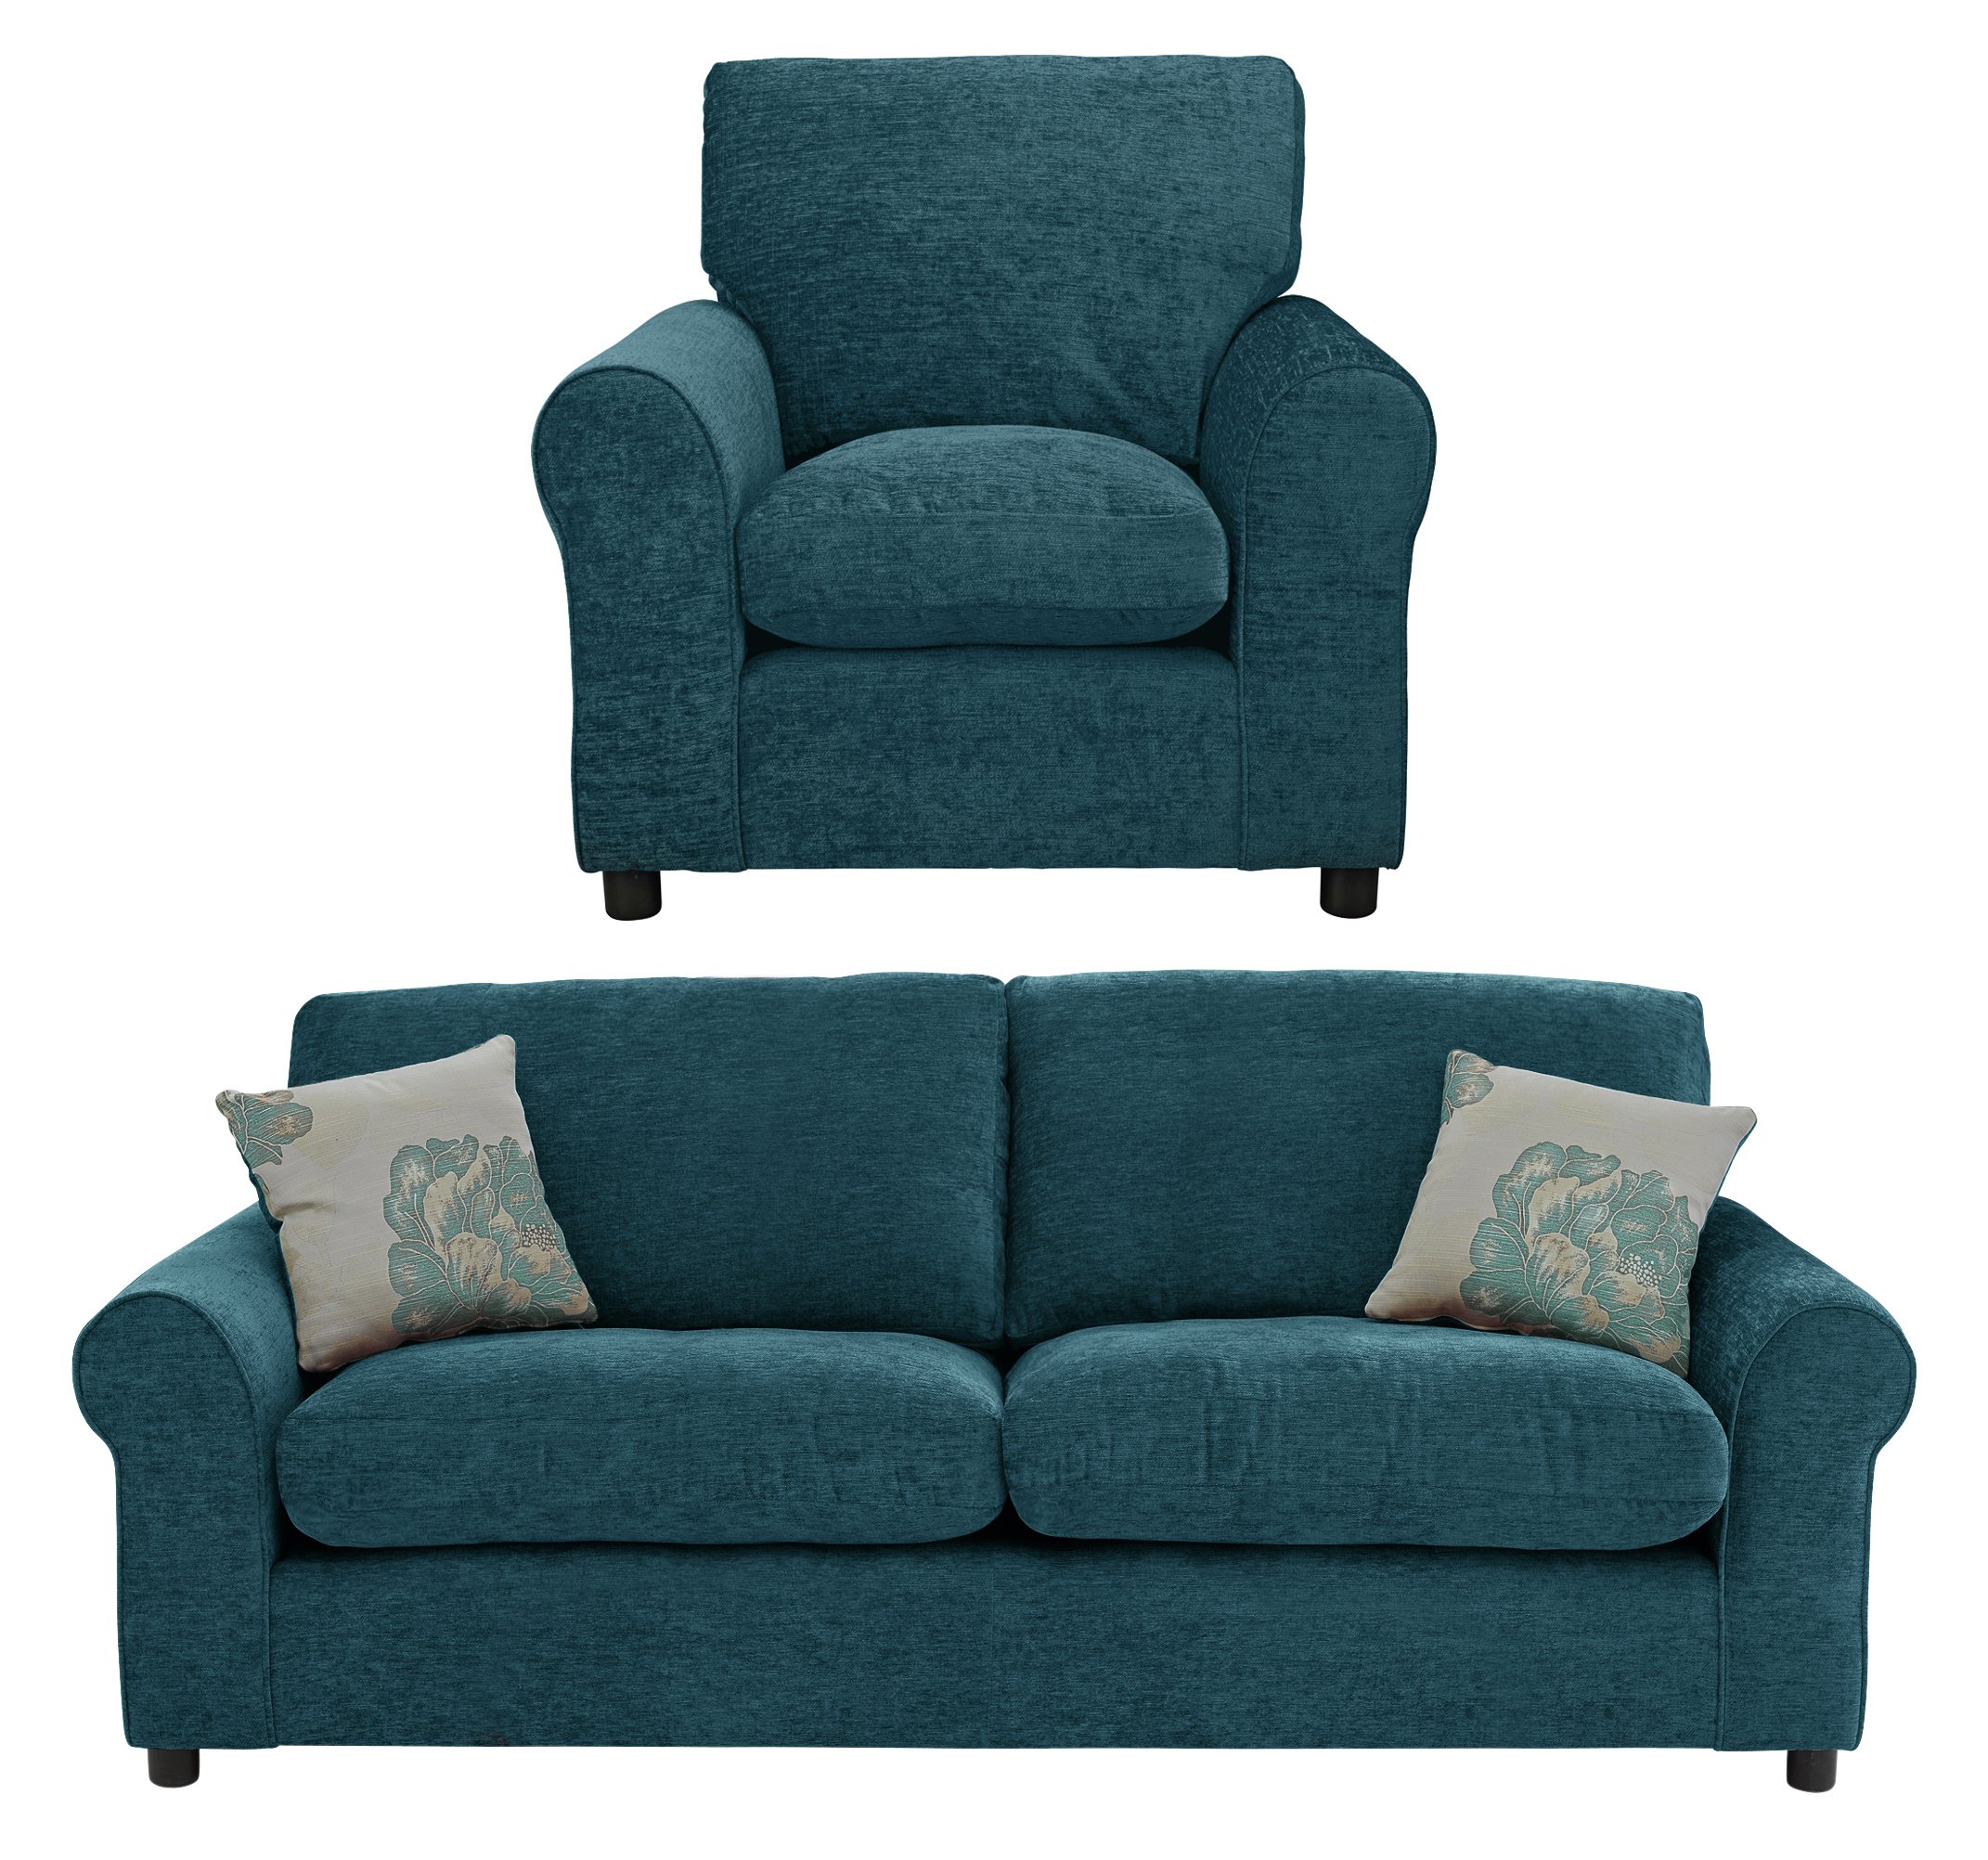 Argos Home Tessa Fabric 3 Seater Sofa and Chair - Teal